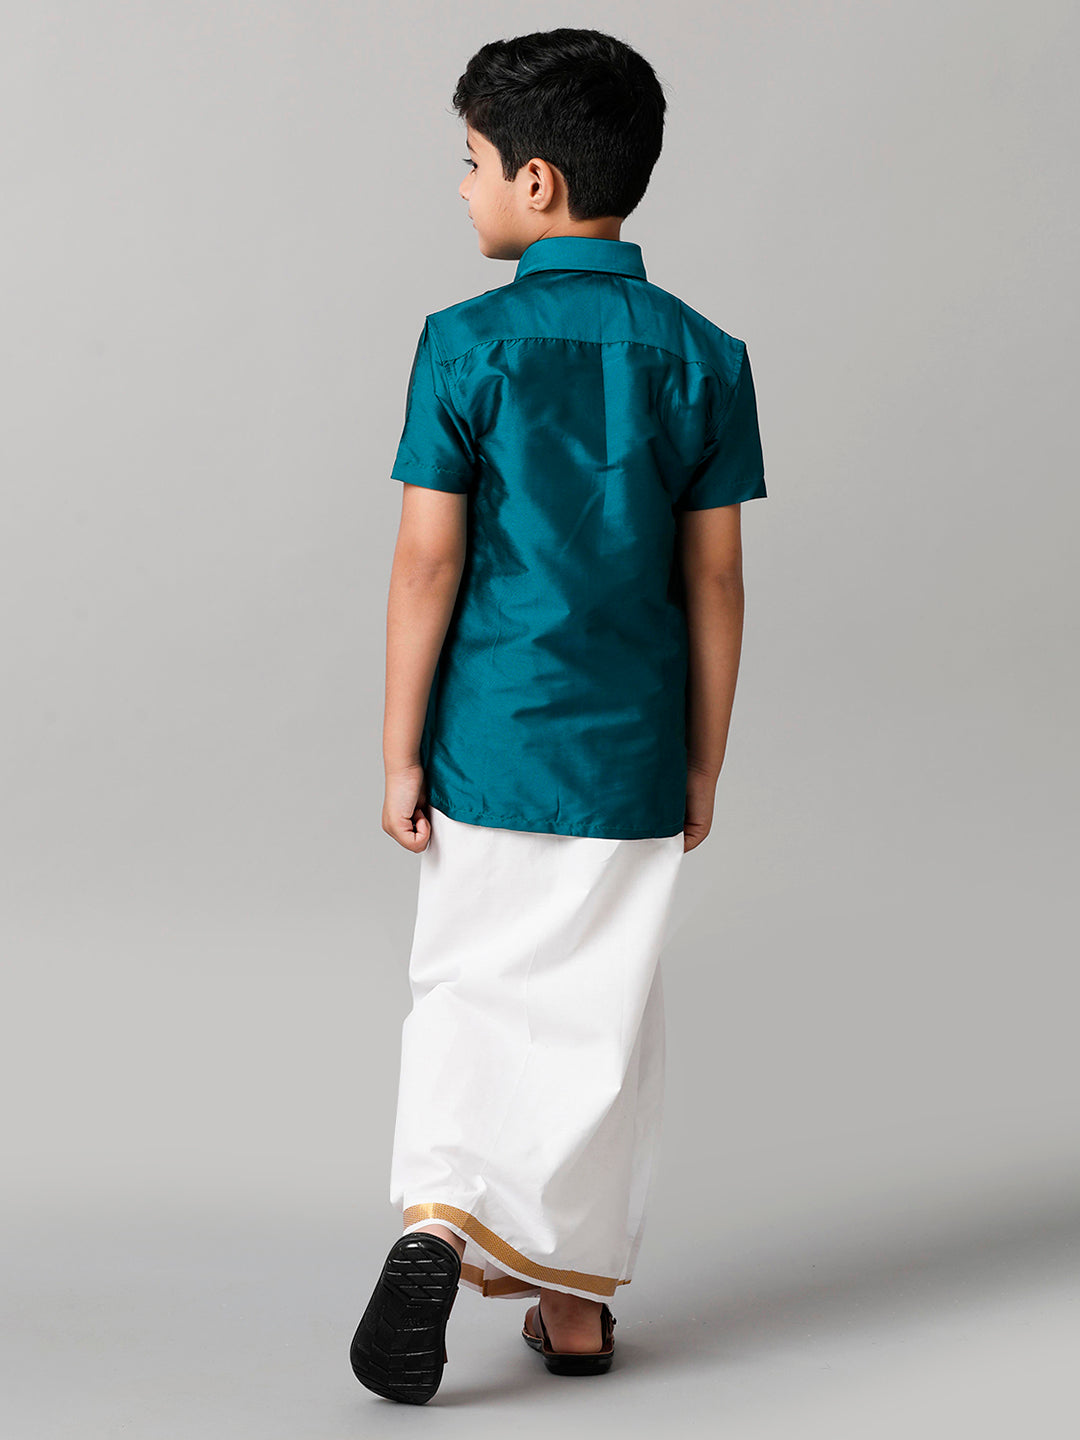 Boys Silk Cotton Ramar Green Half Sleeves Shirt with Adjustable White Dhoti Combo K3-Back view